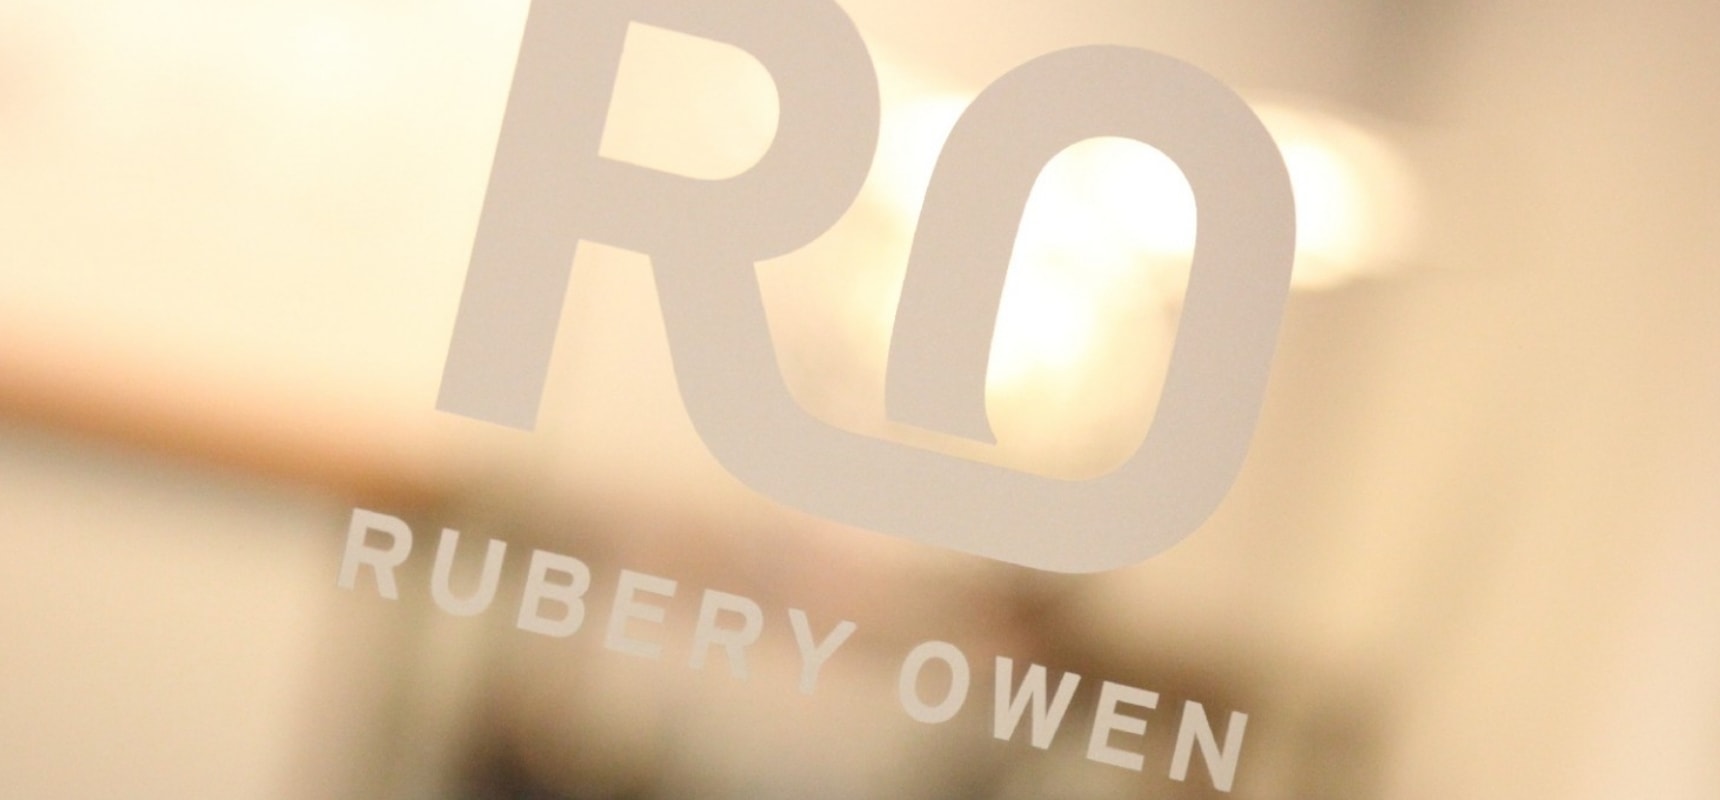 Rubery Owen logo installed as window signage